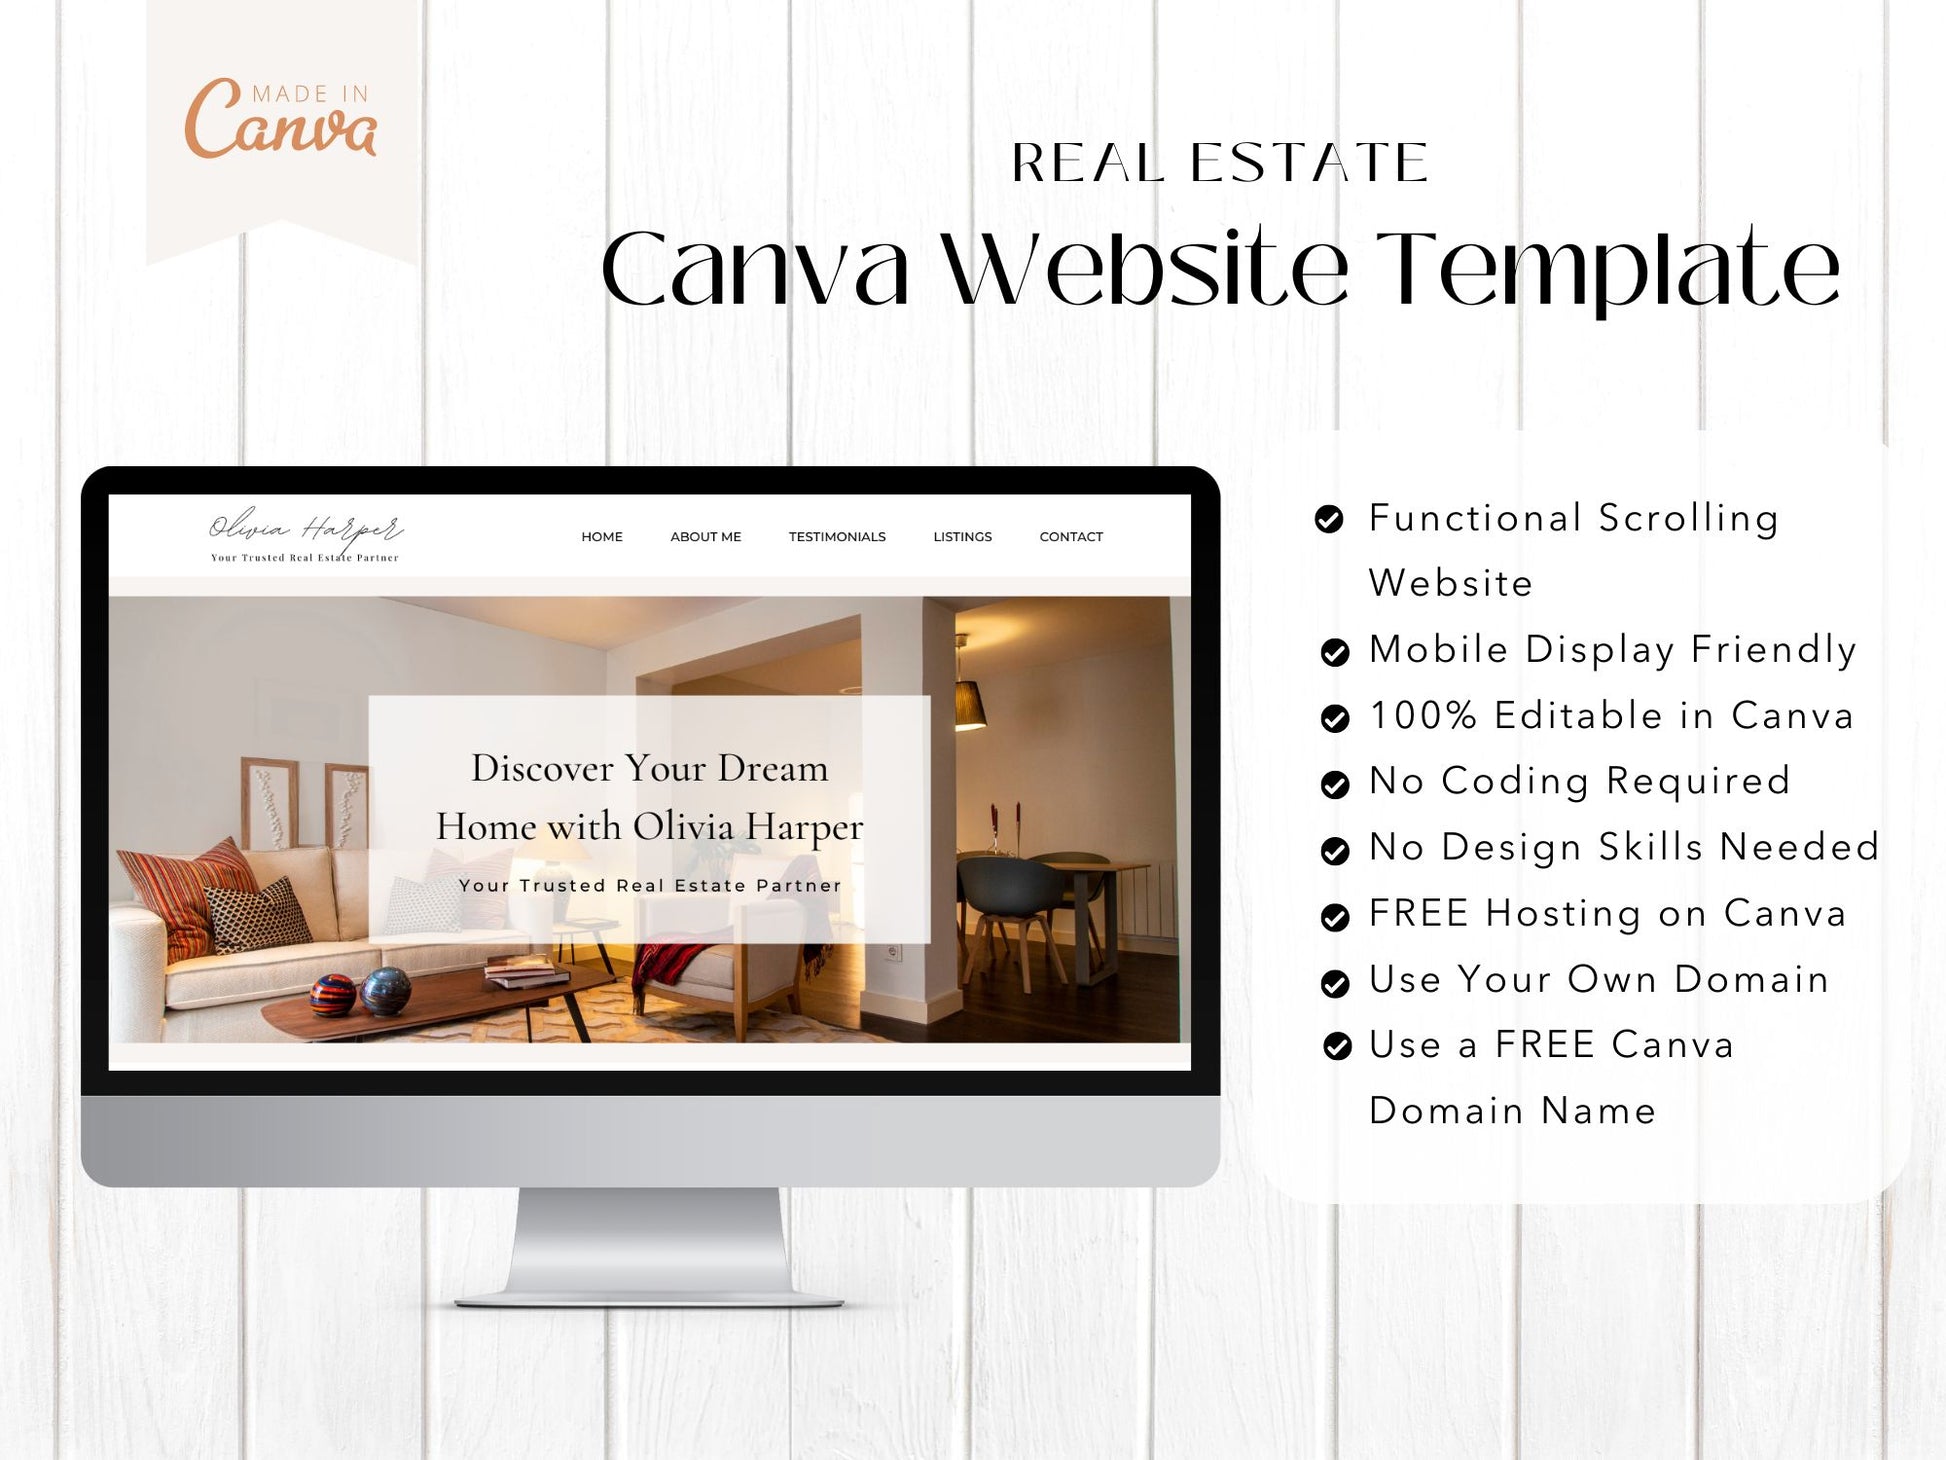 Real Estate Canva Site - Dynamic and versatile online platform for real estate professionals.